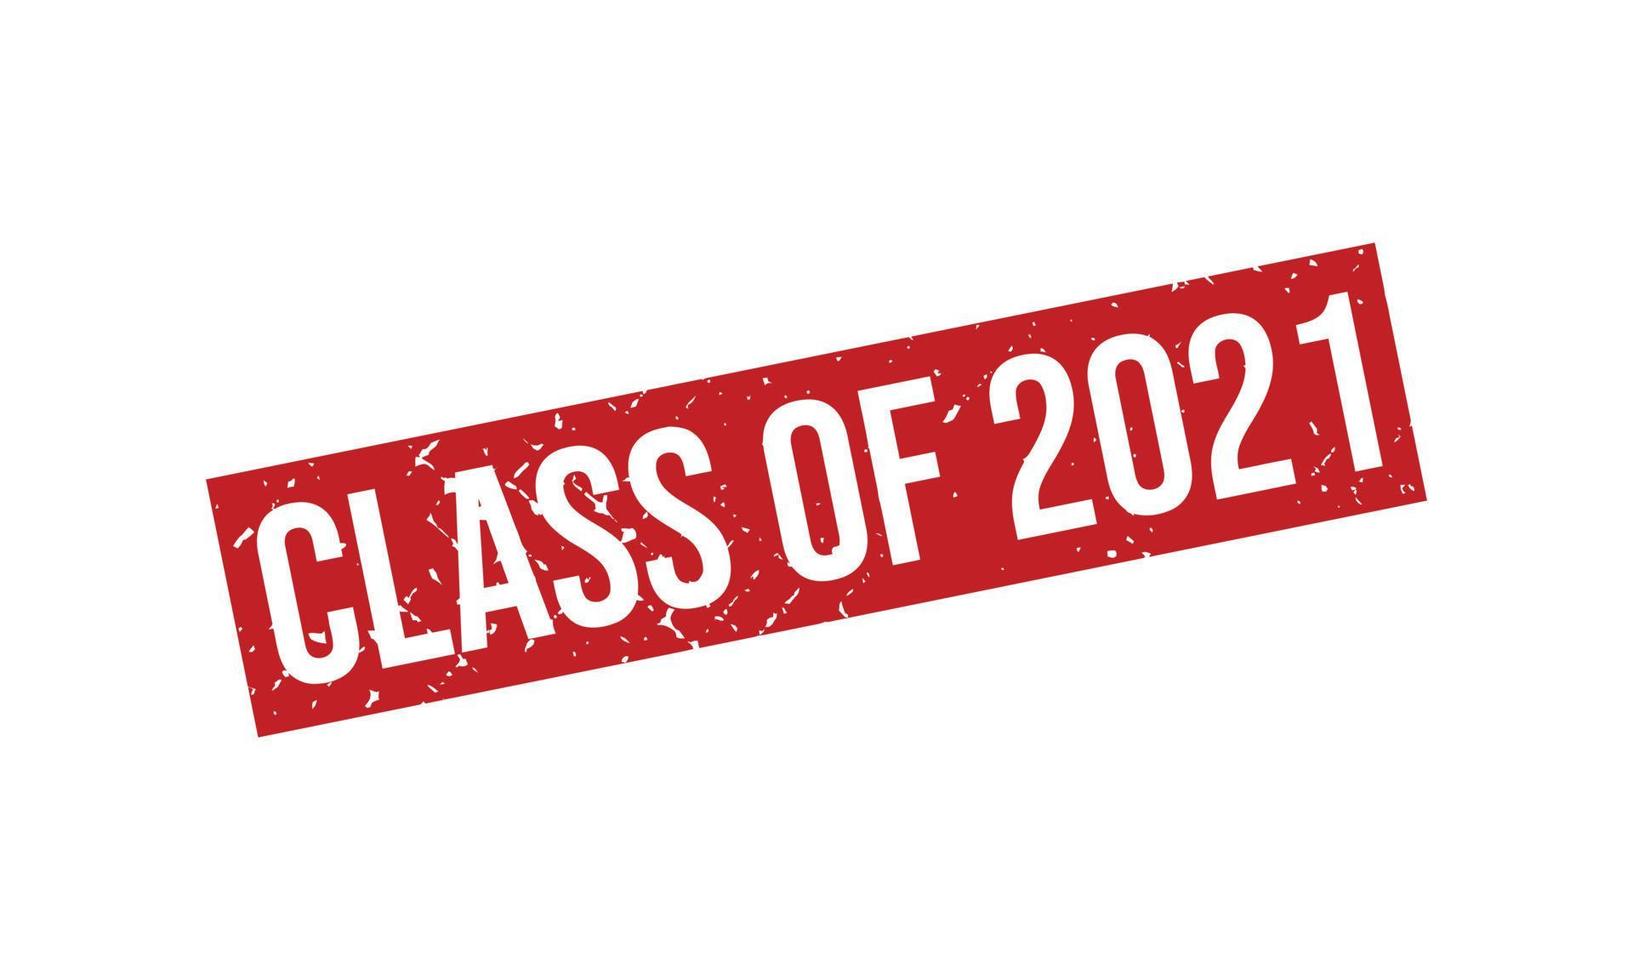 classe do 2021 borracha carimbo. classe do 2021 grunge carimbo foca vetor ilustração